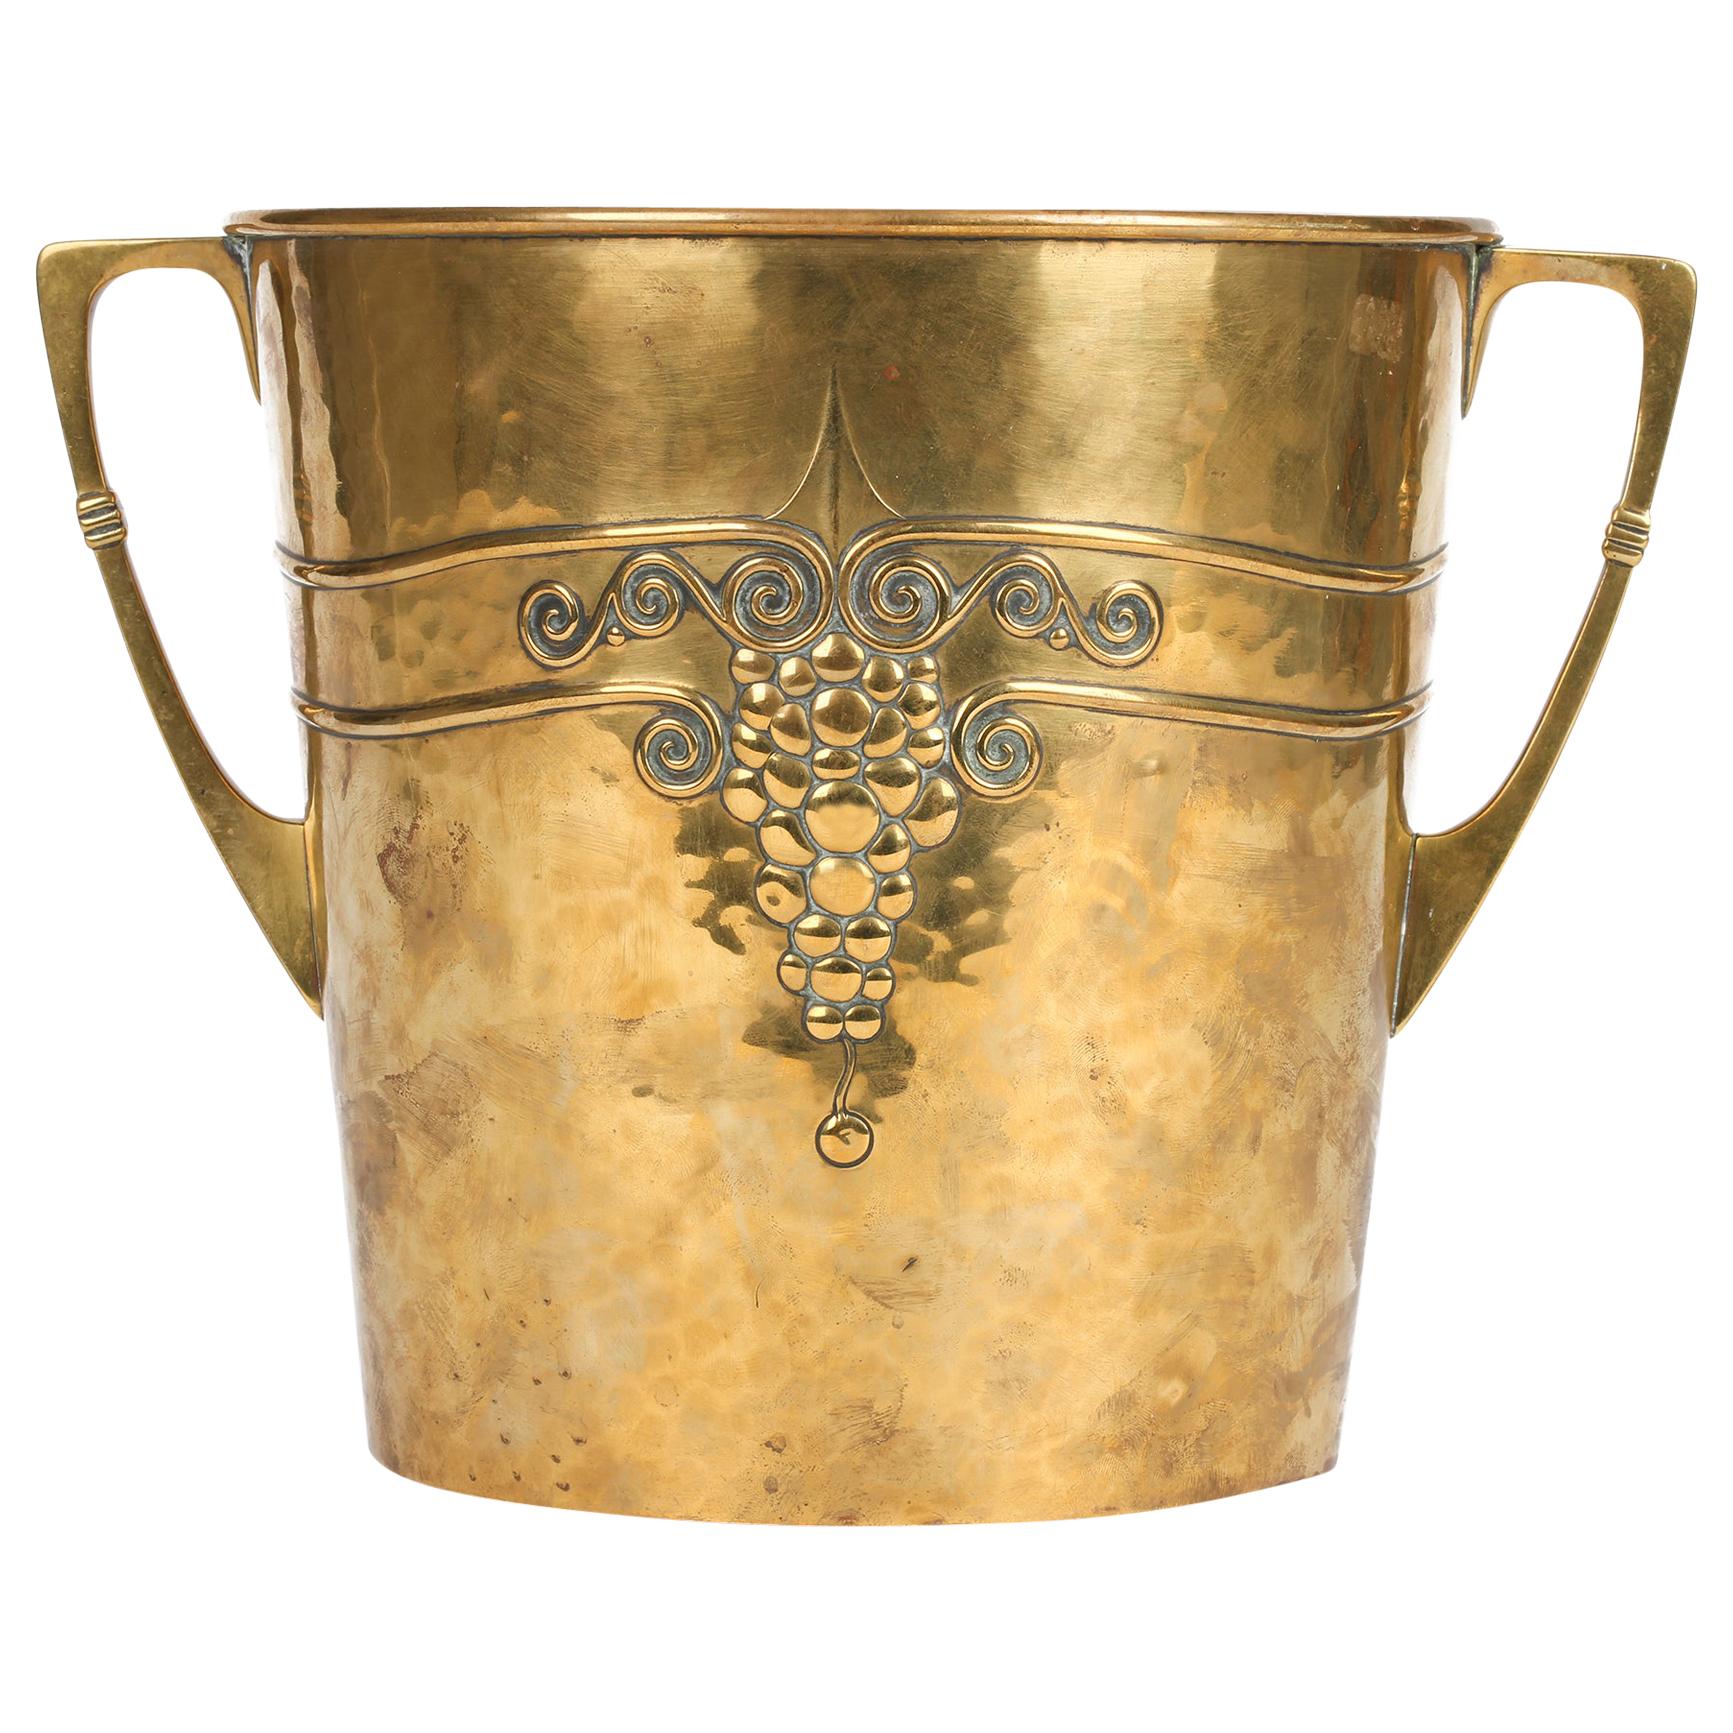 WMF German Jugendstil Hammered Brass Twin Handled Ice Bucket